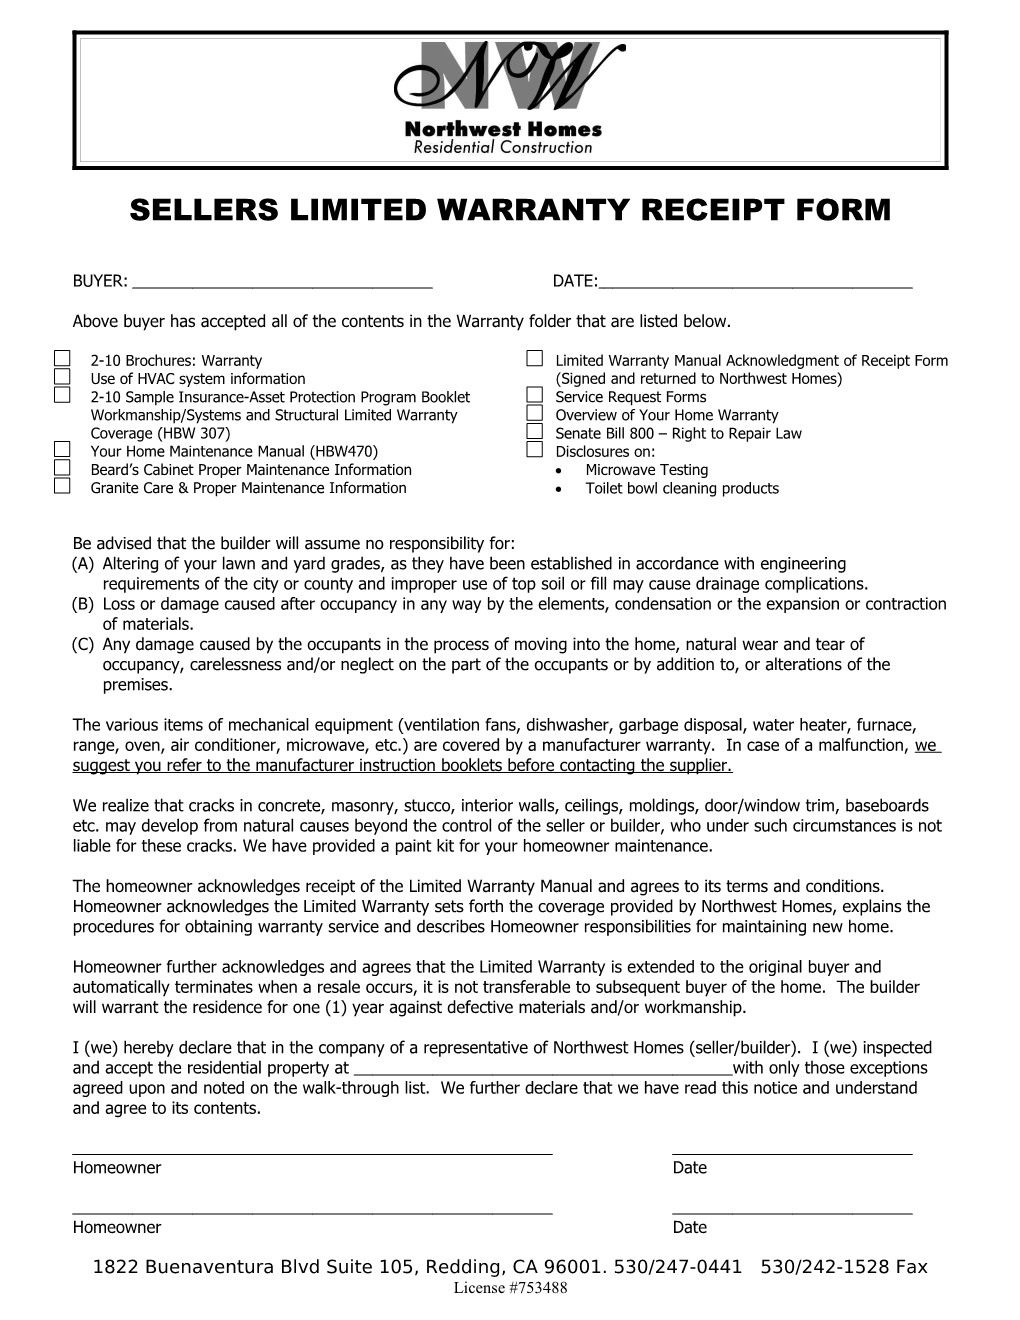 Sellers Limited Warranty Receipt Form